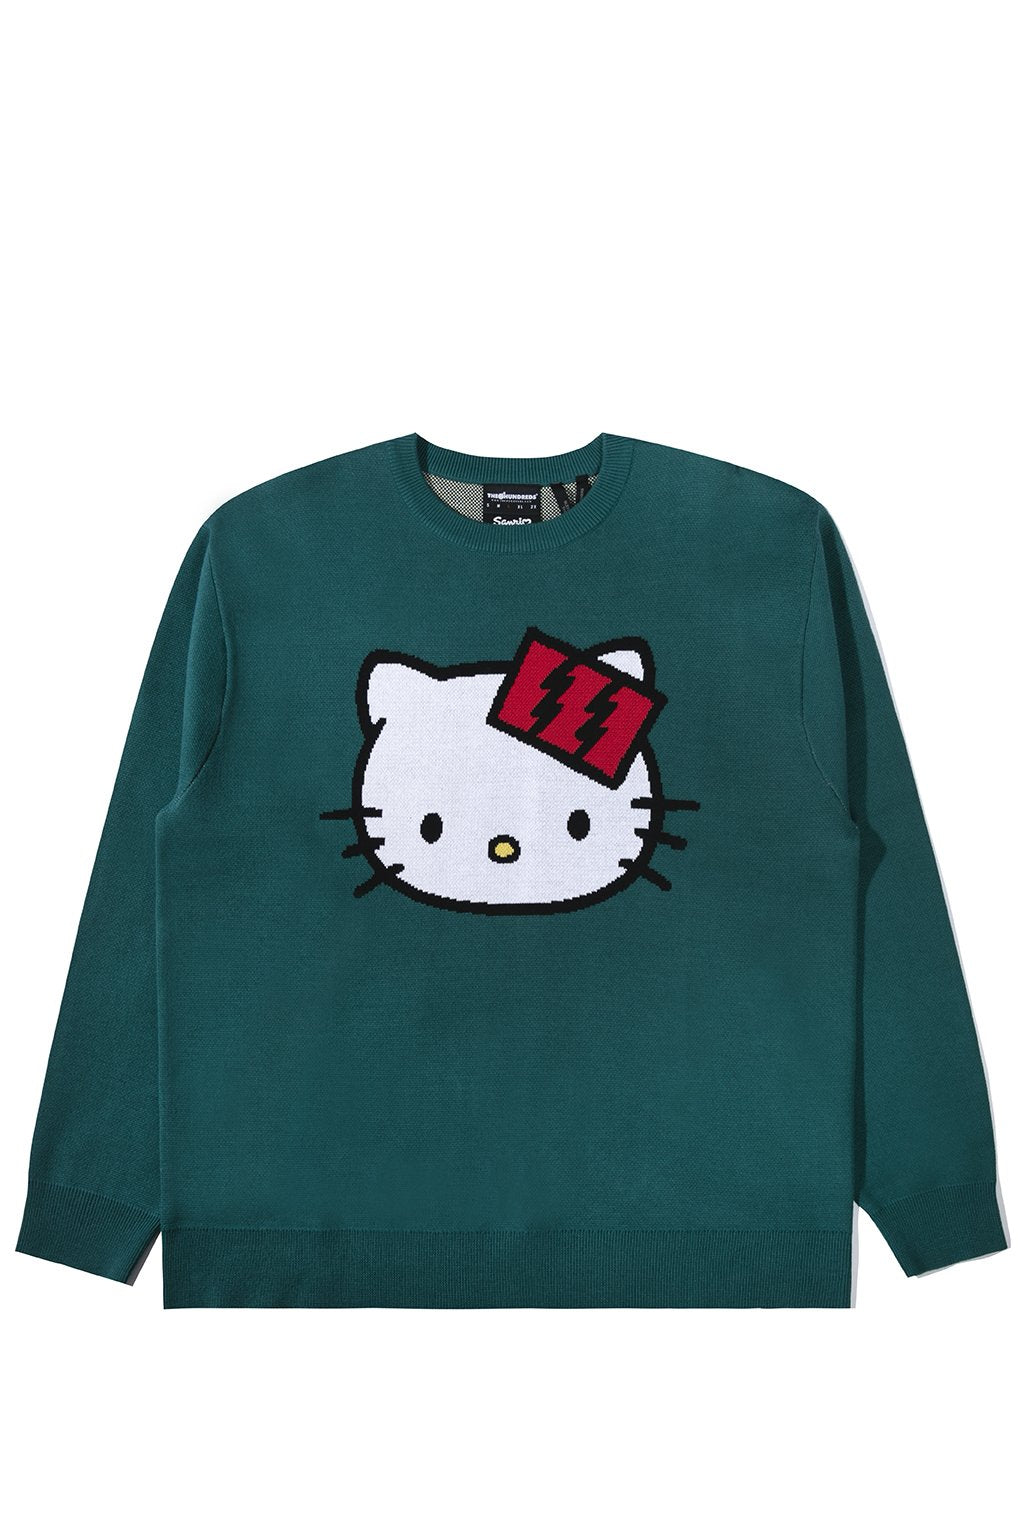 The Hundreds x Sanrio Hello Kitty Sweater in Emerald